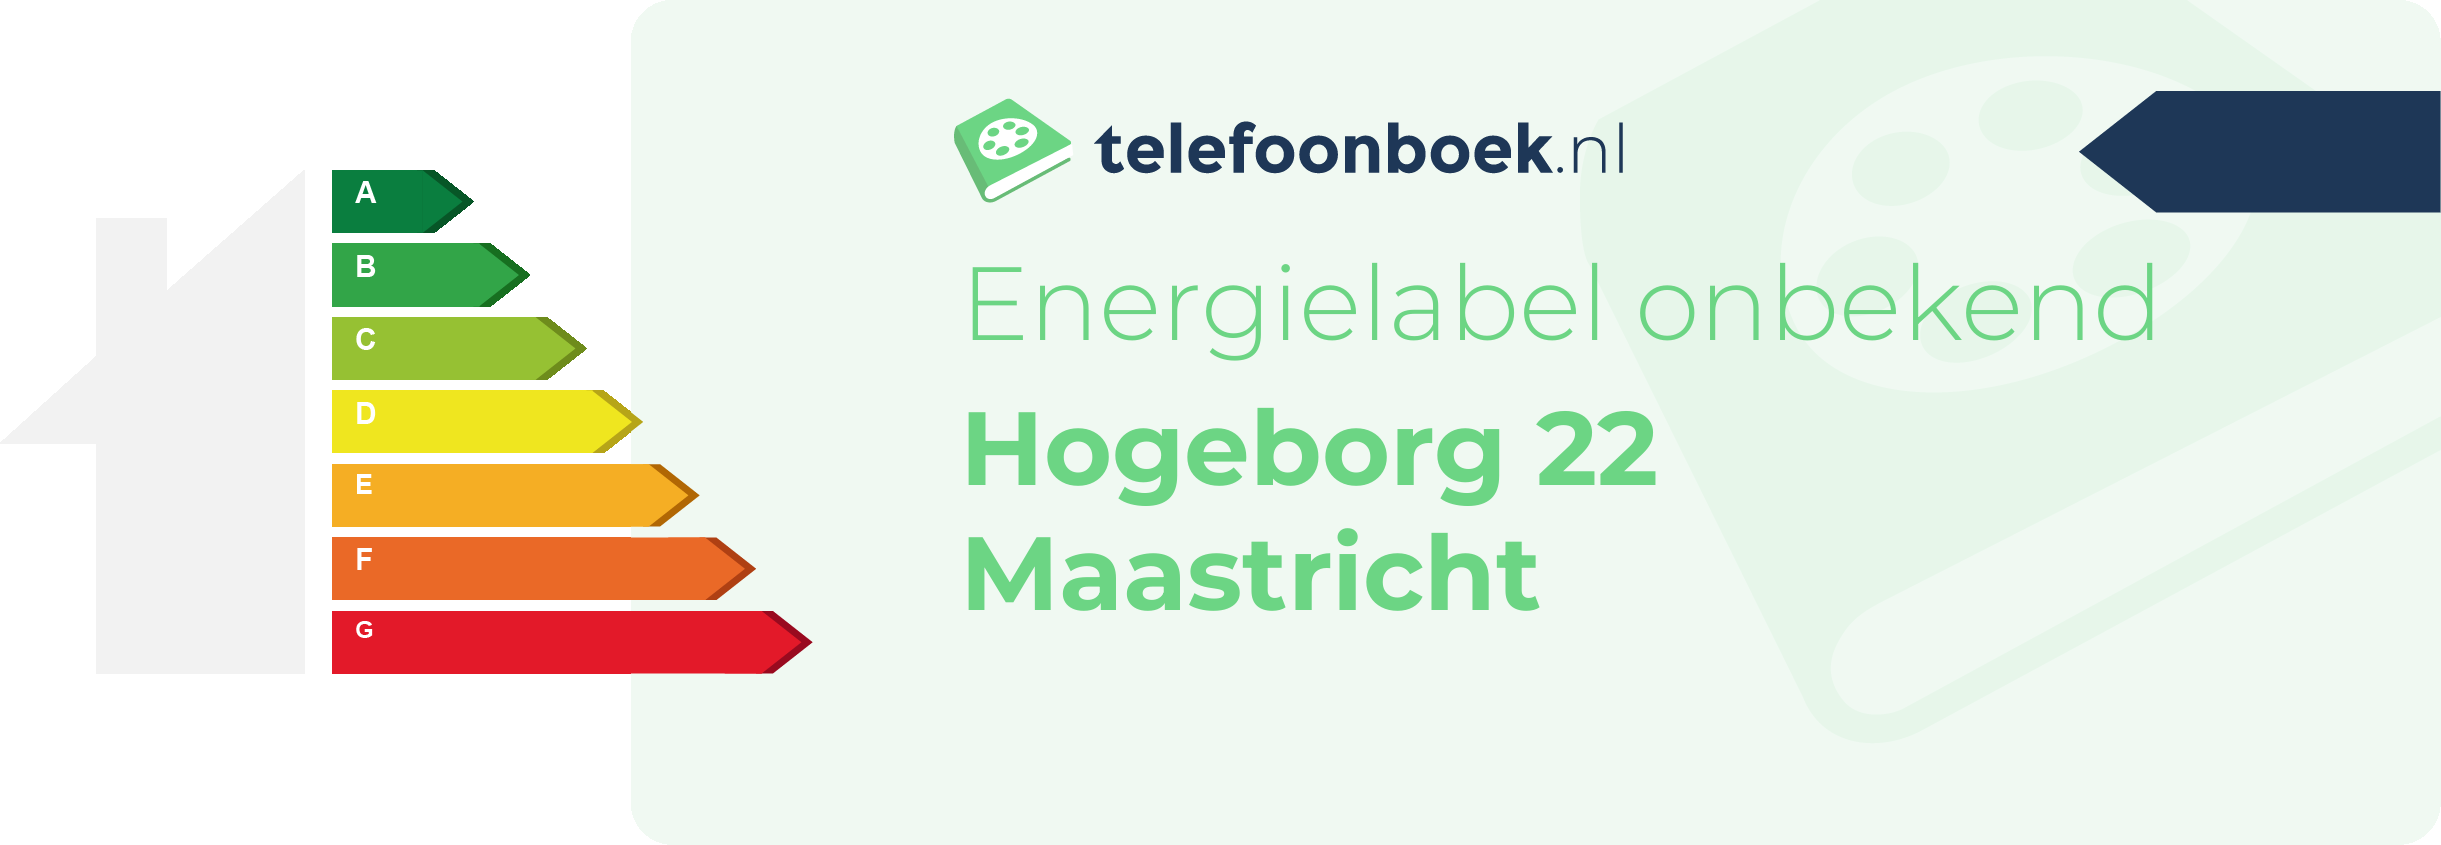 Energielabel Hogeborg 22 Maastricht